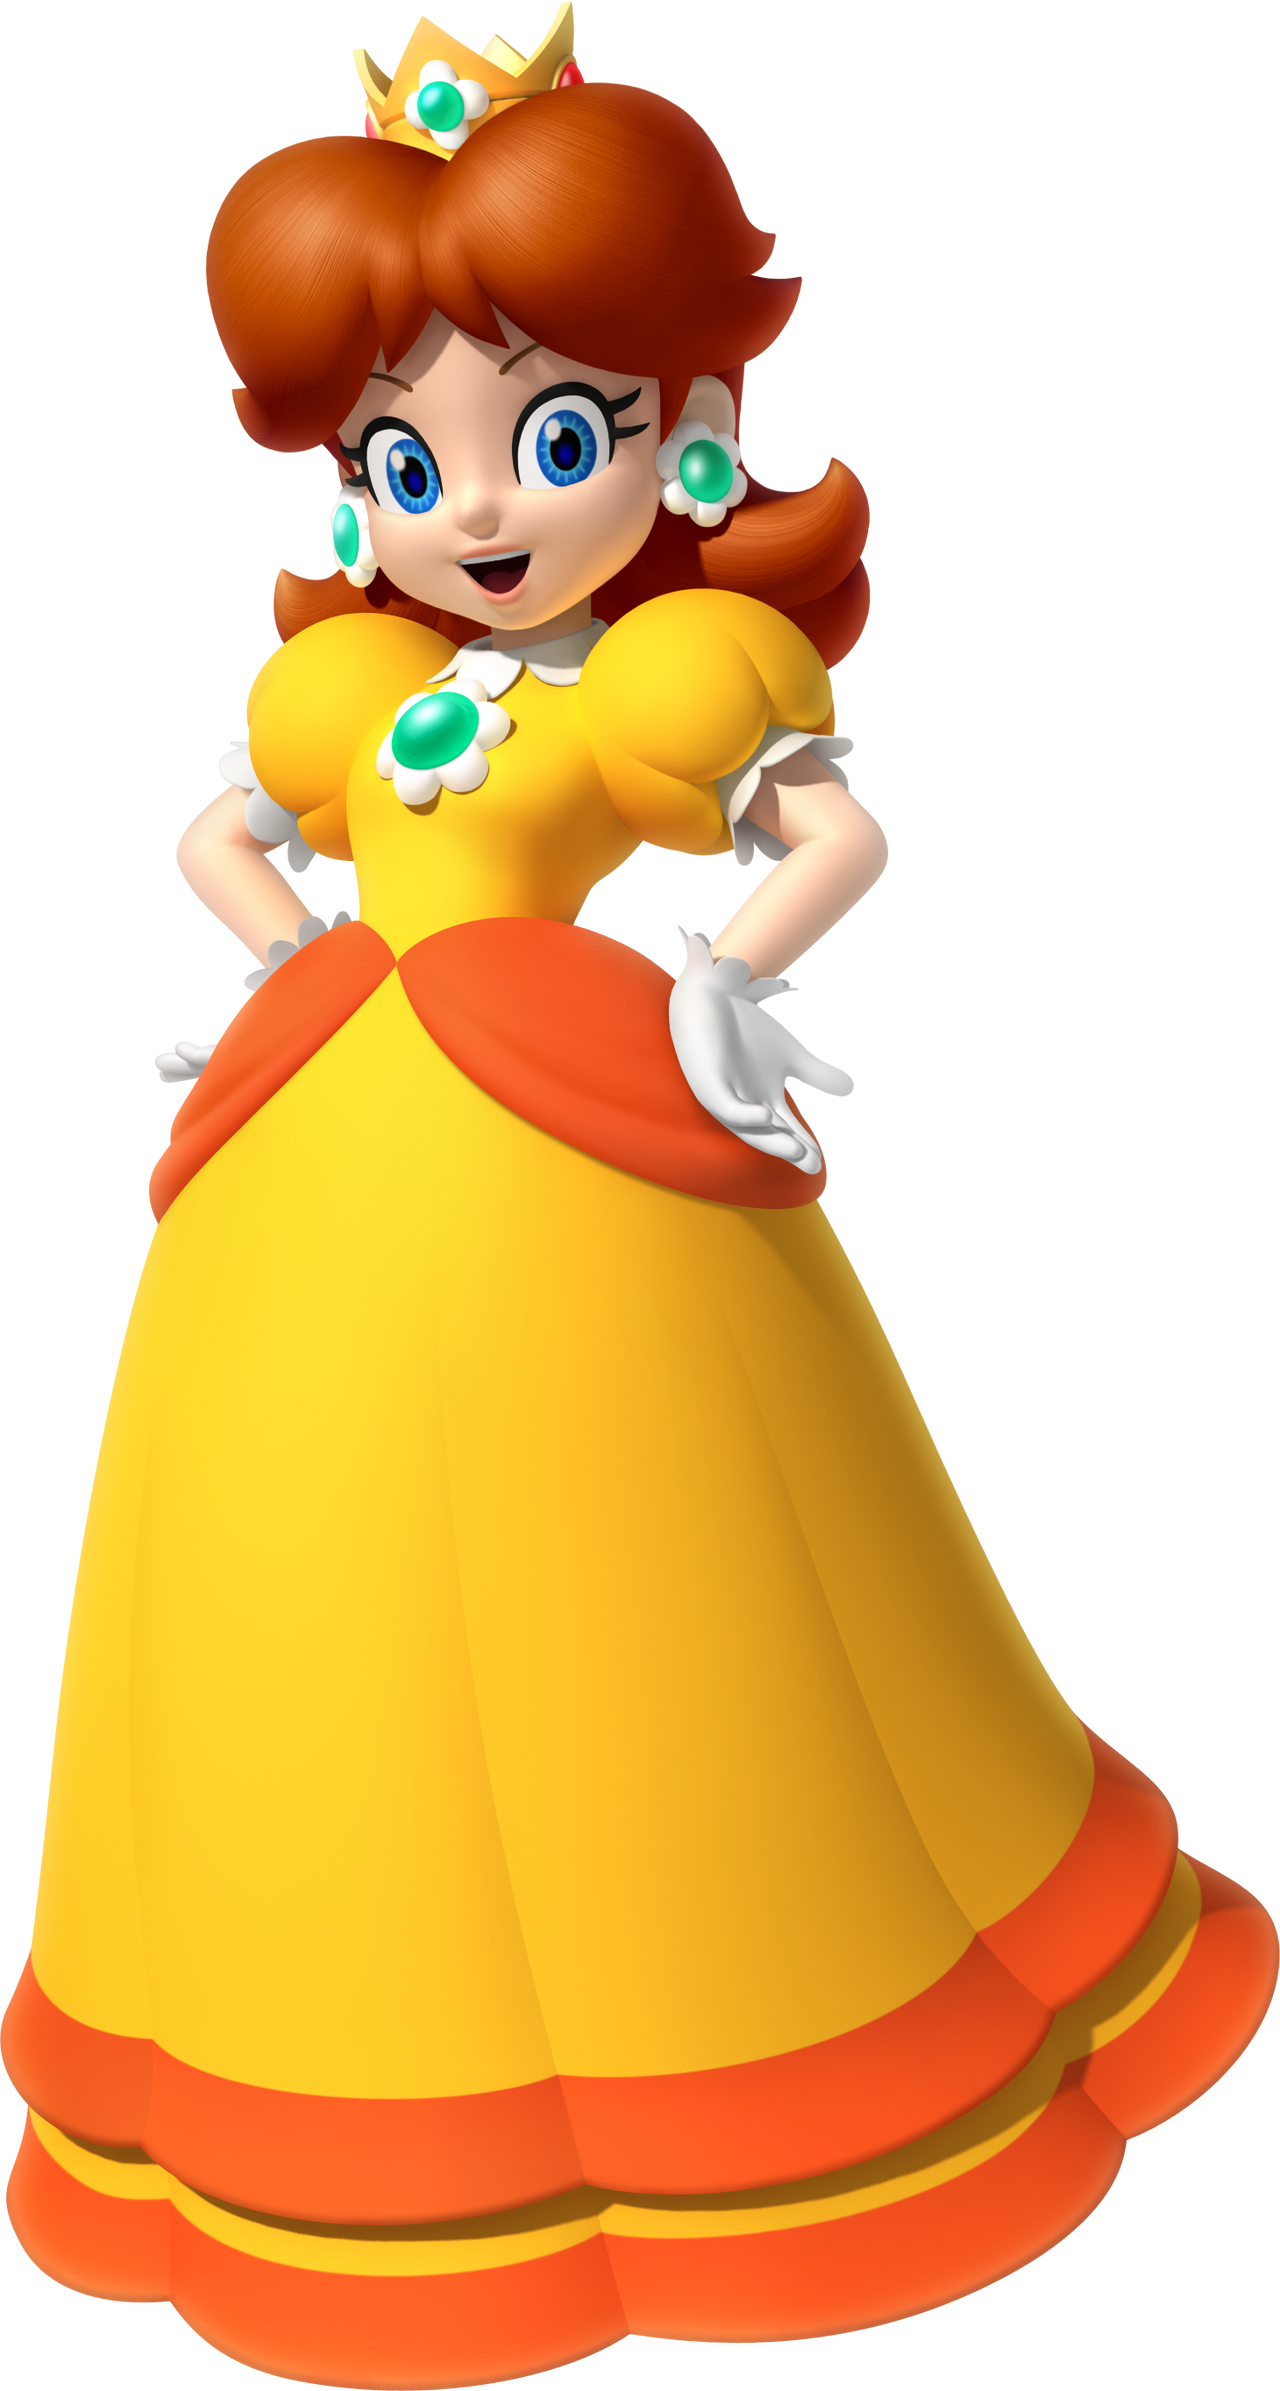 Vergelijkbaar Behoren munt Princess Daisy (Mario Party 10) by DaquanHarrison16 on DeviantArt